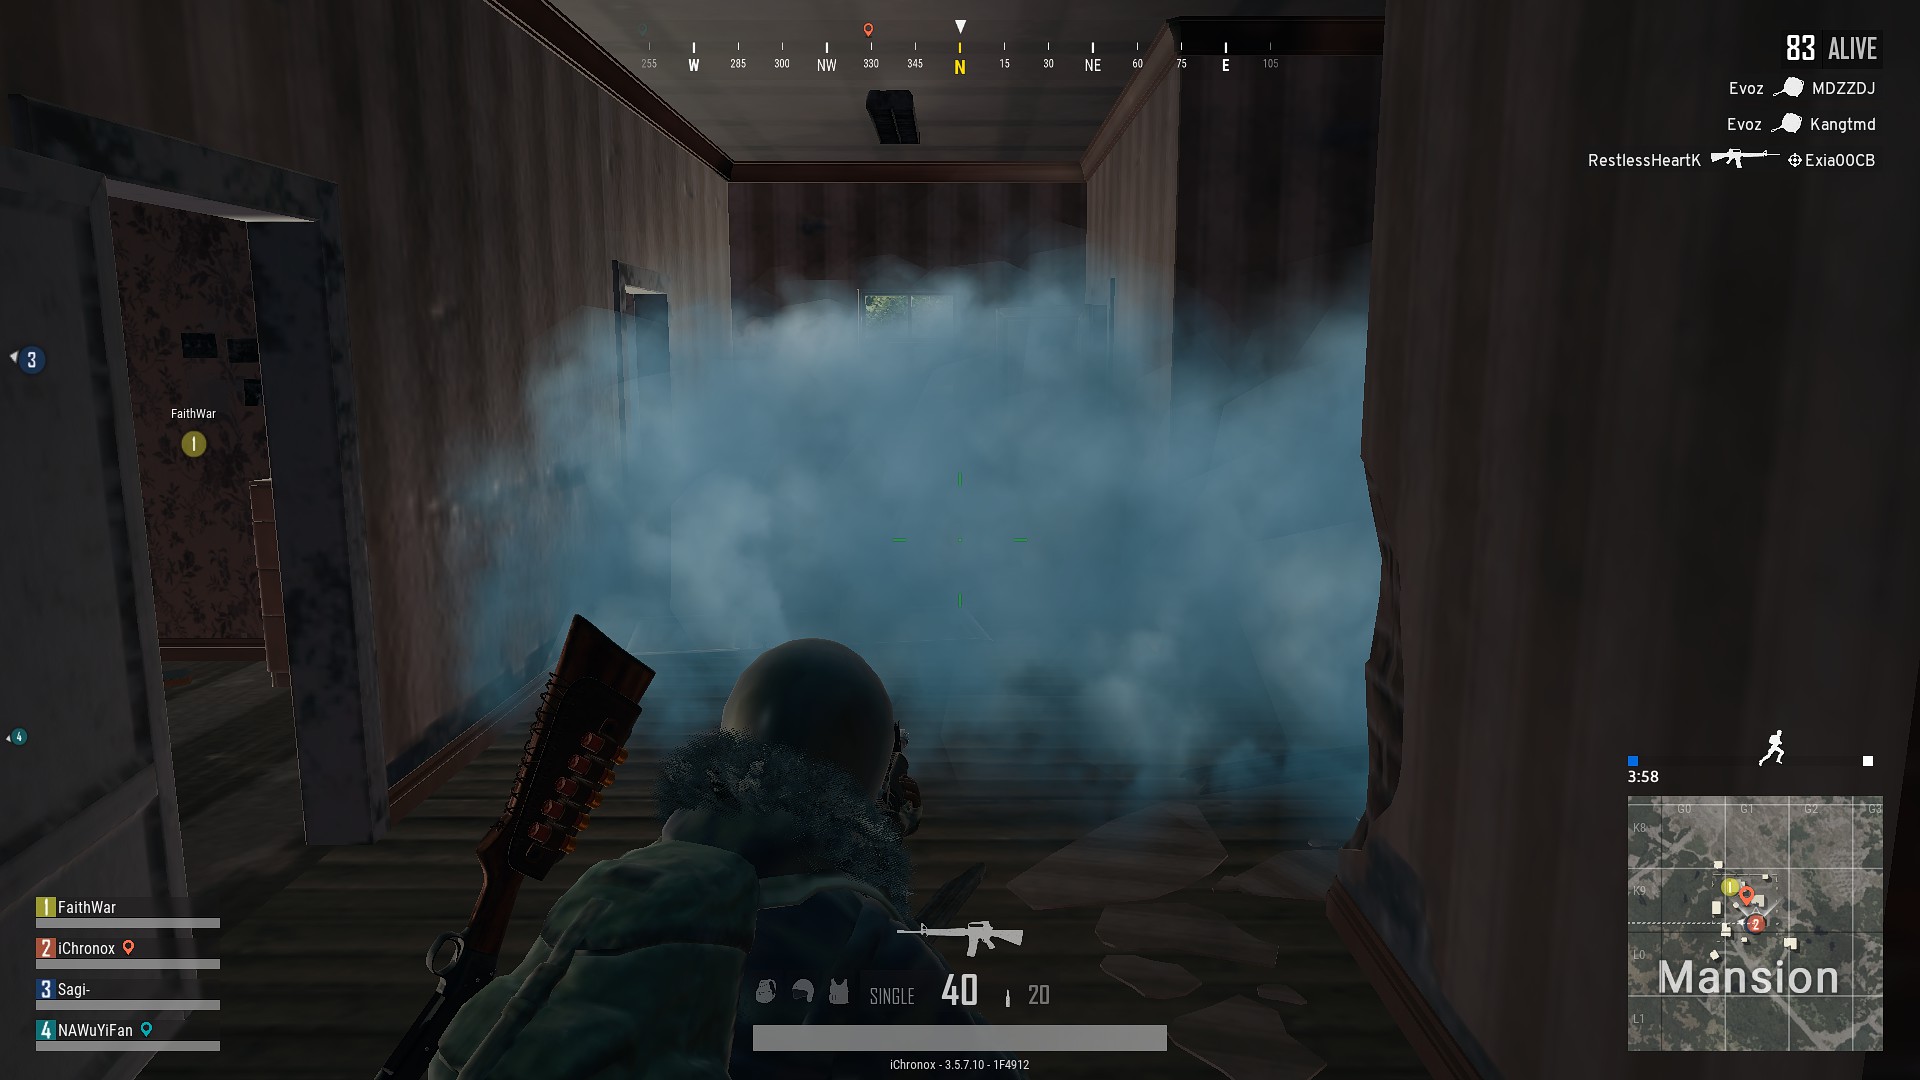 PSA: You can get Blue Smoke from Smoke Grenades (?) : PUBATTLEGROUNDS